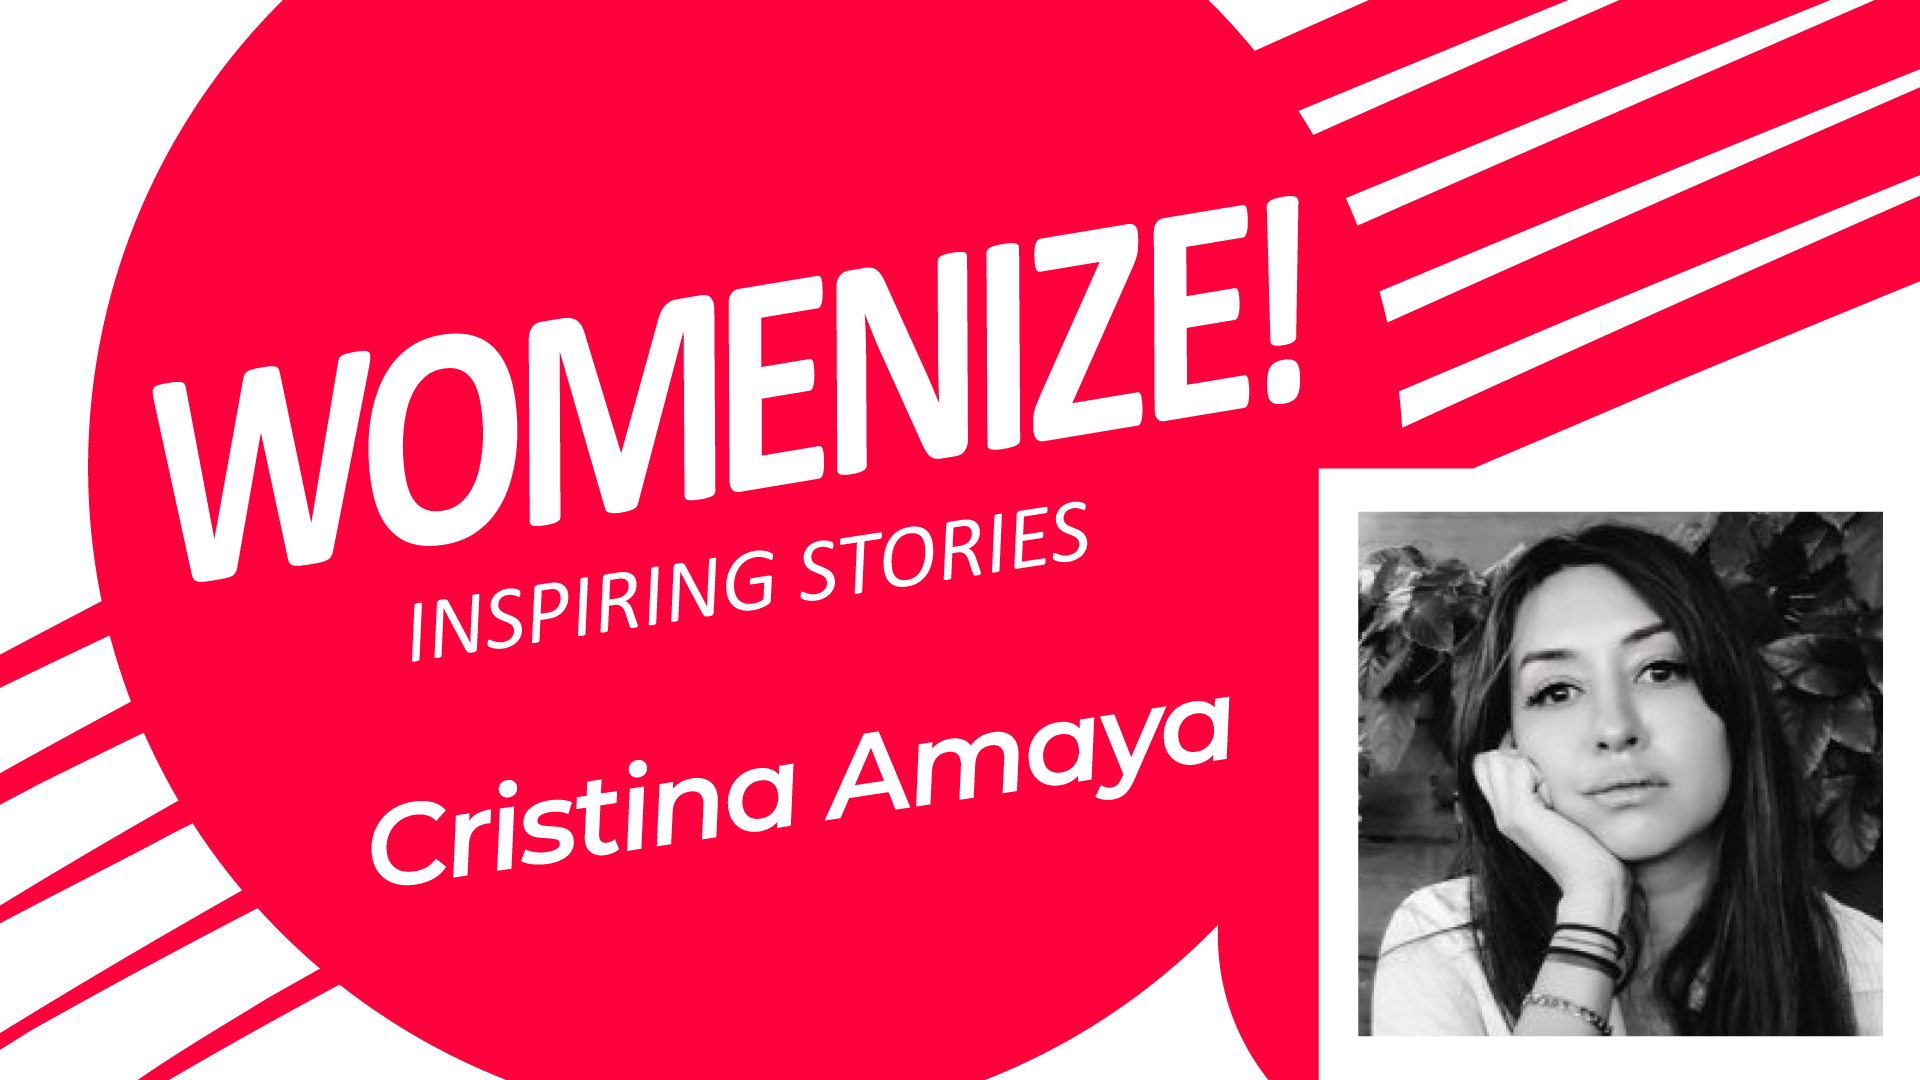 Cristina Amaya Womenize Inspiring Stories Womenize Action Program